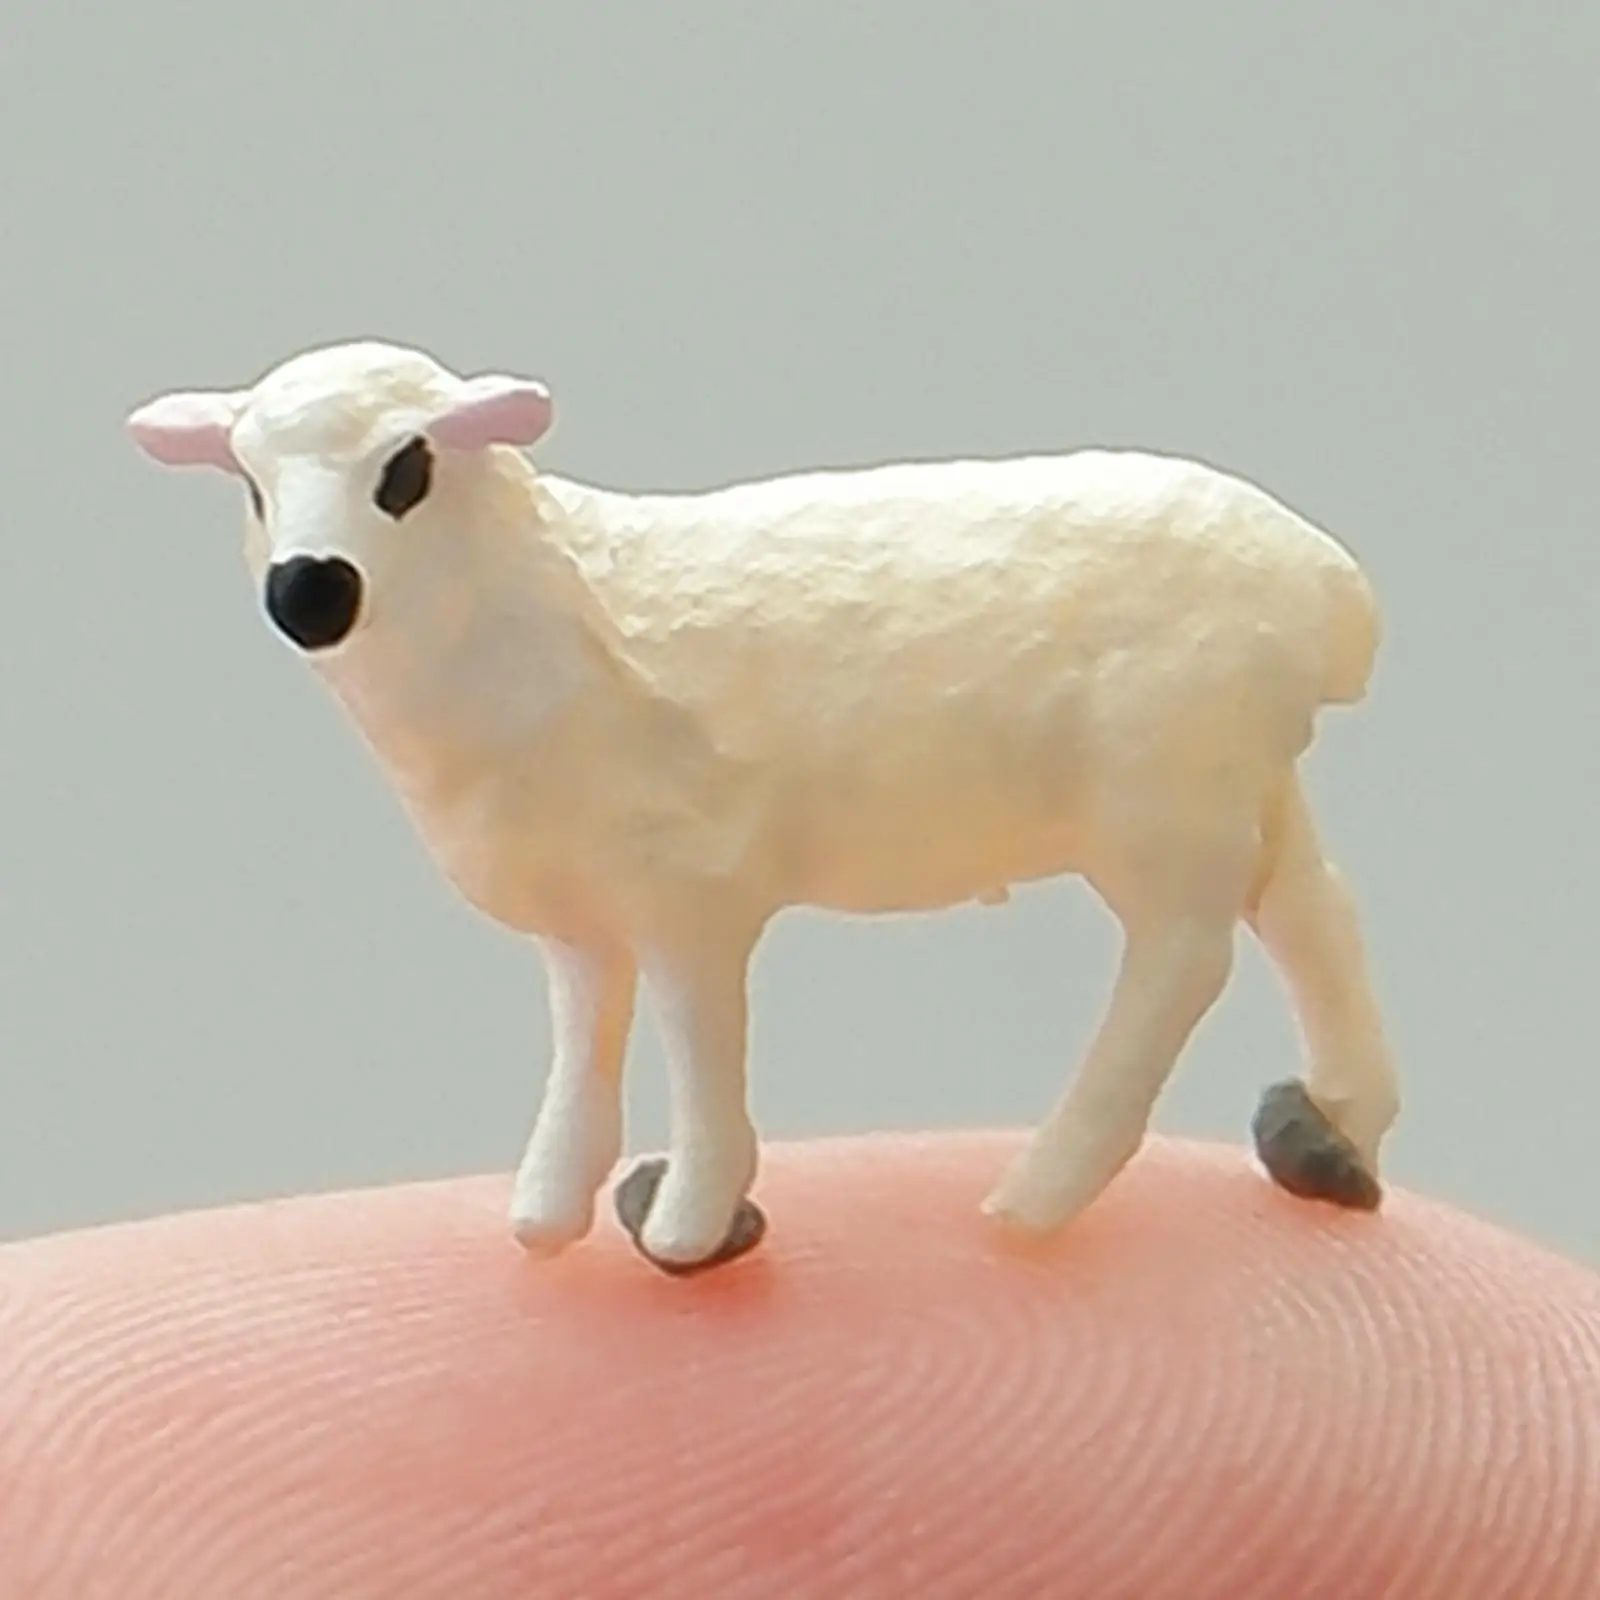 Sheep Figurine 1:64 Miniature Figures Realistic Figurine Model Animal Figures Miniature Scene Ornament Model Building Kits